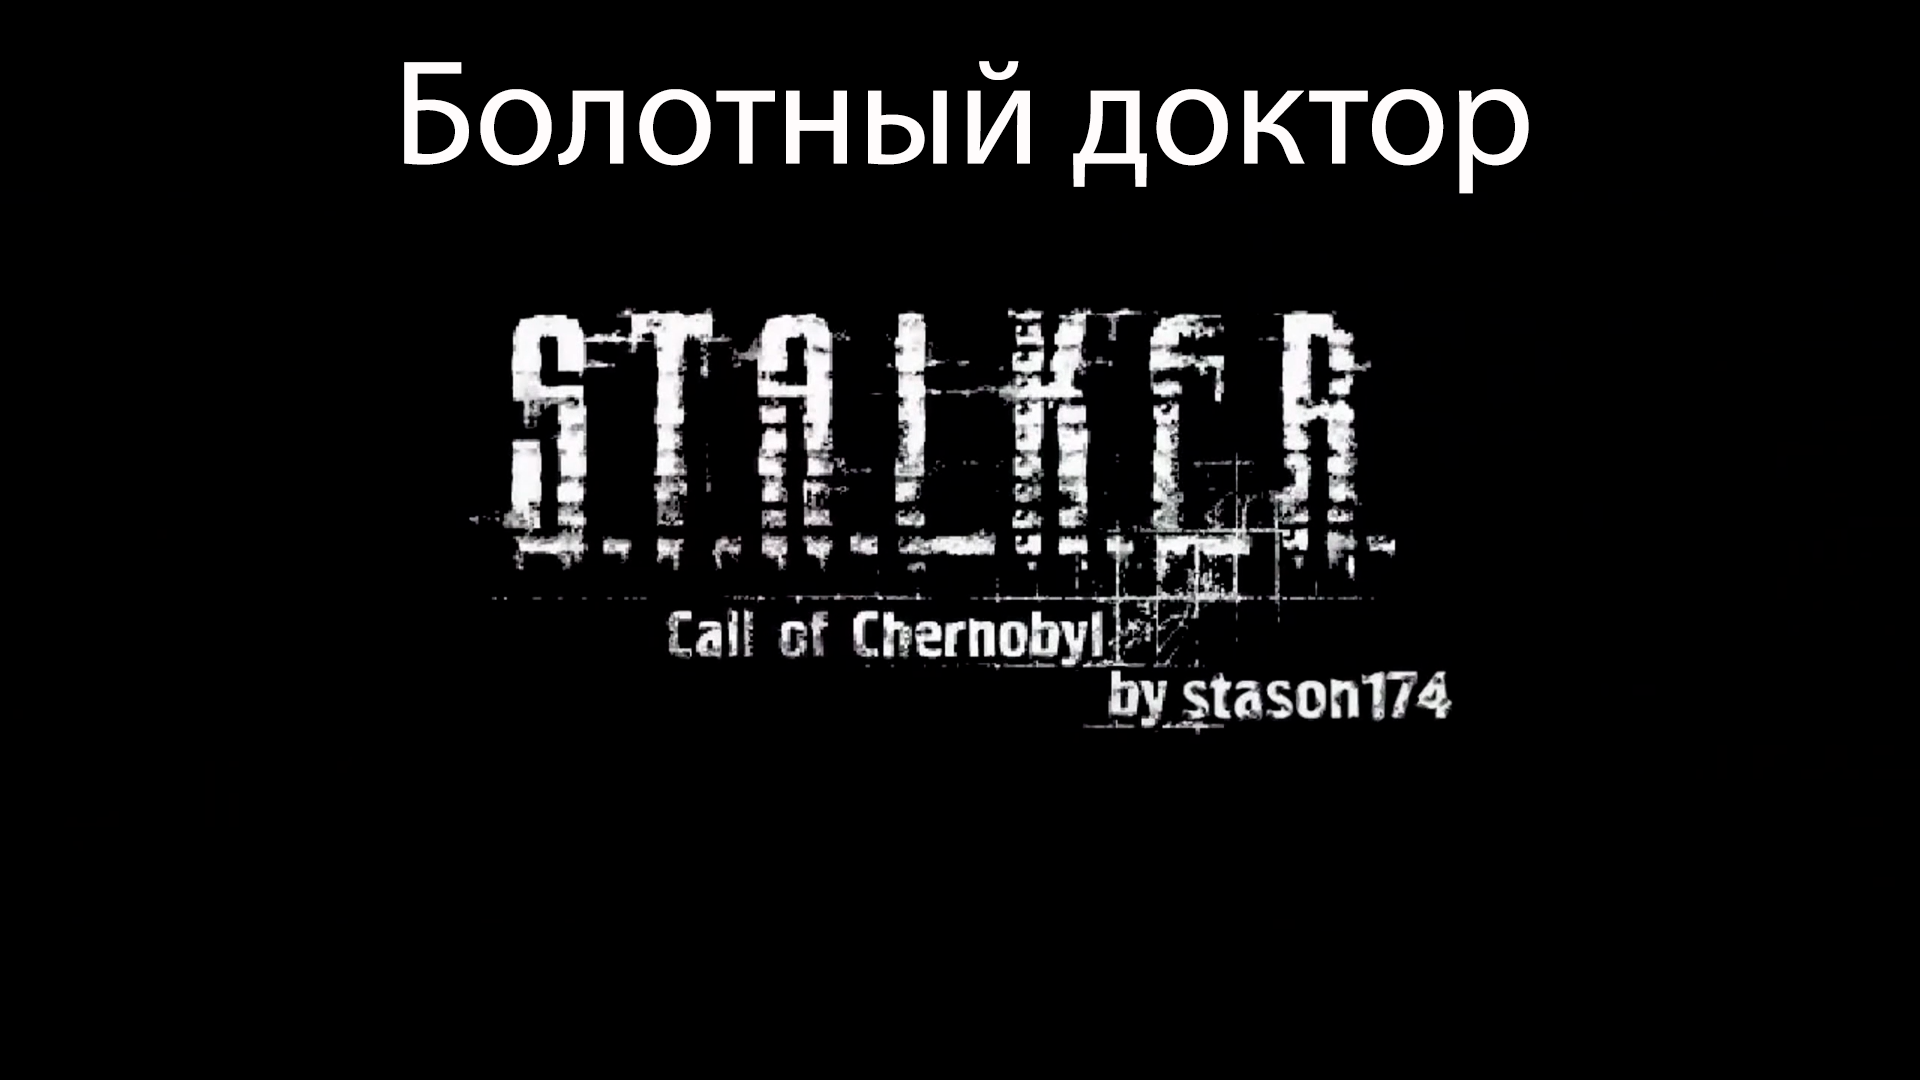 S.T.A.L.K.E.R.: Call of Chernobyl by stason174 #4. Болотный доктор